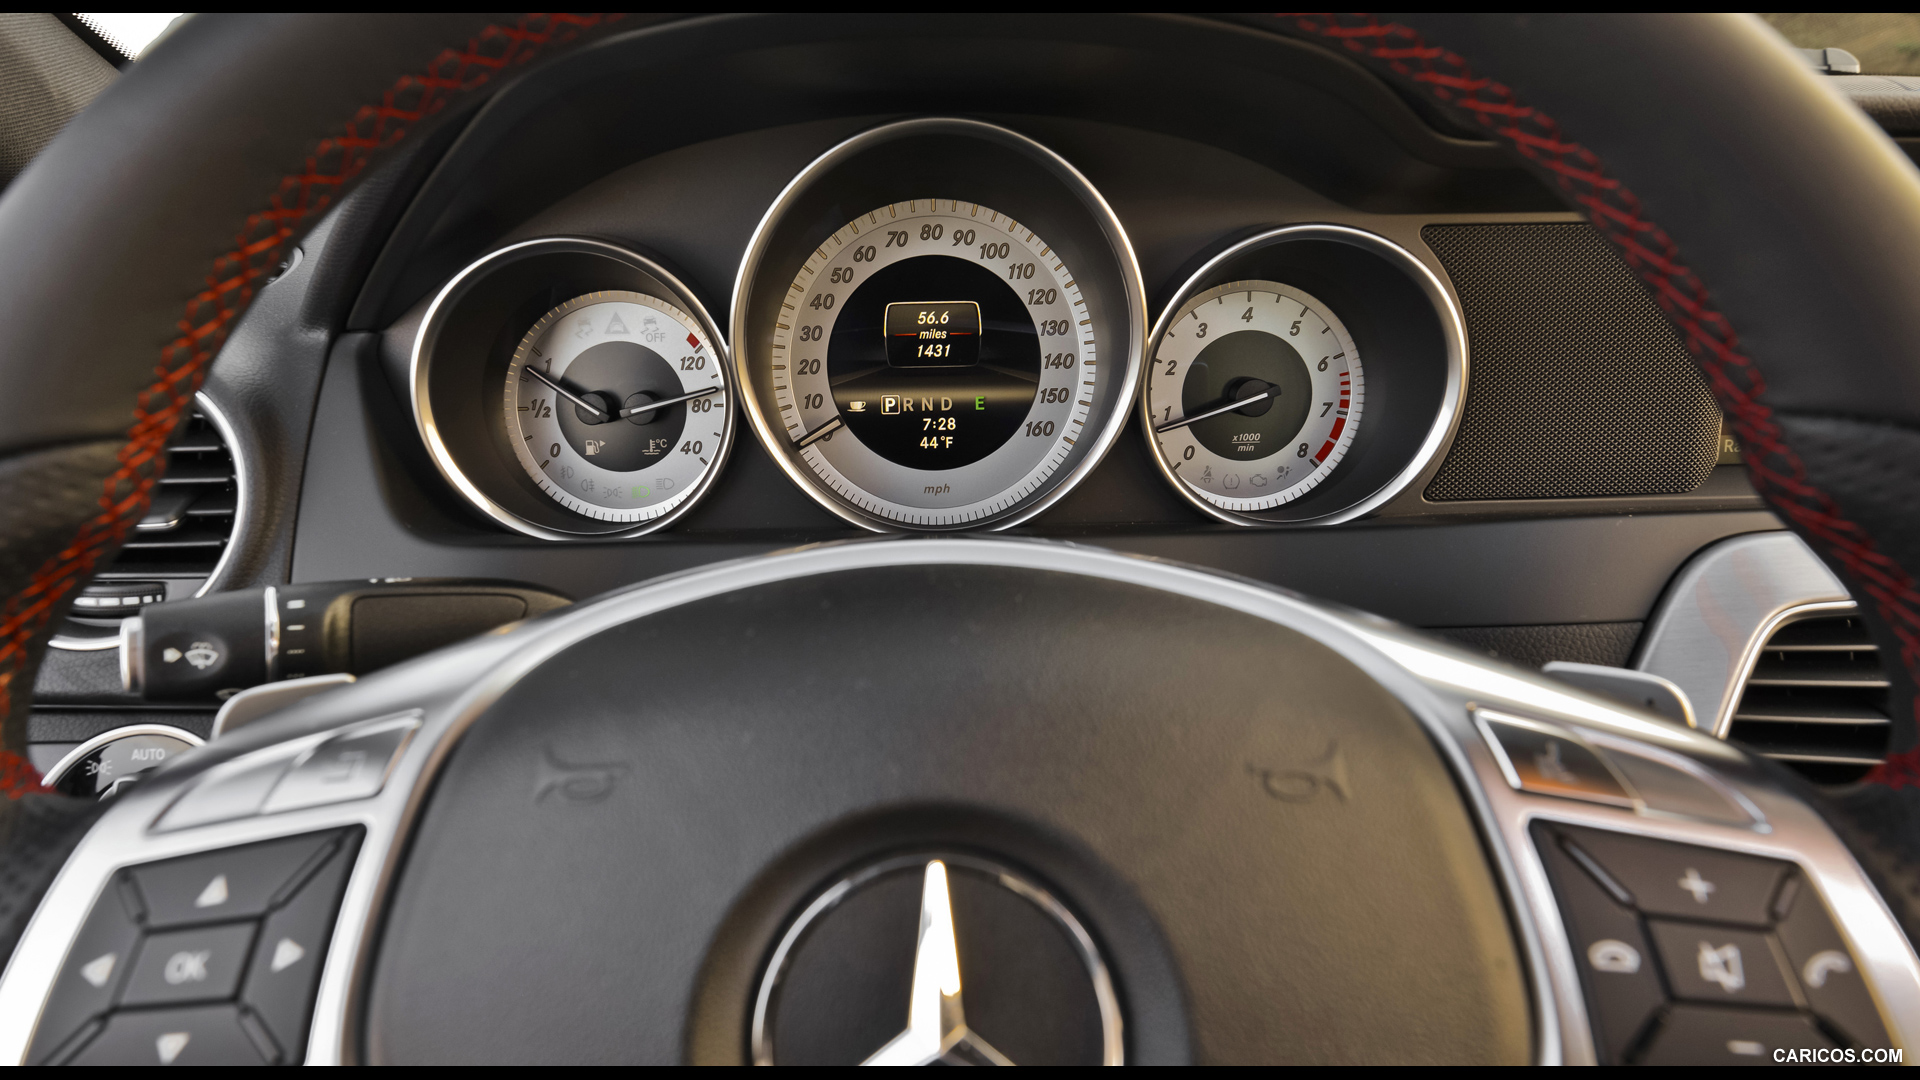 2013 Mercedes-Benz C250 Sedan Sport Package Plus  - Instrument Cluster, #118 of 122